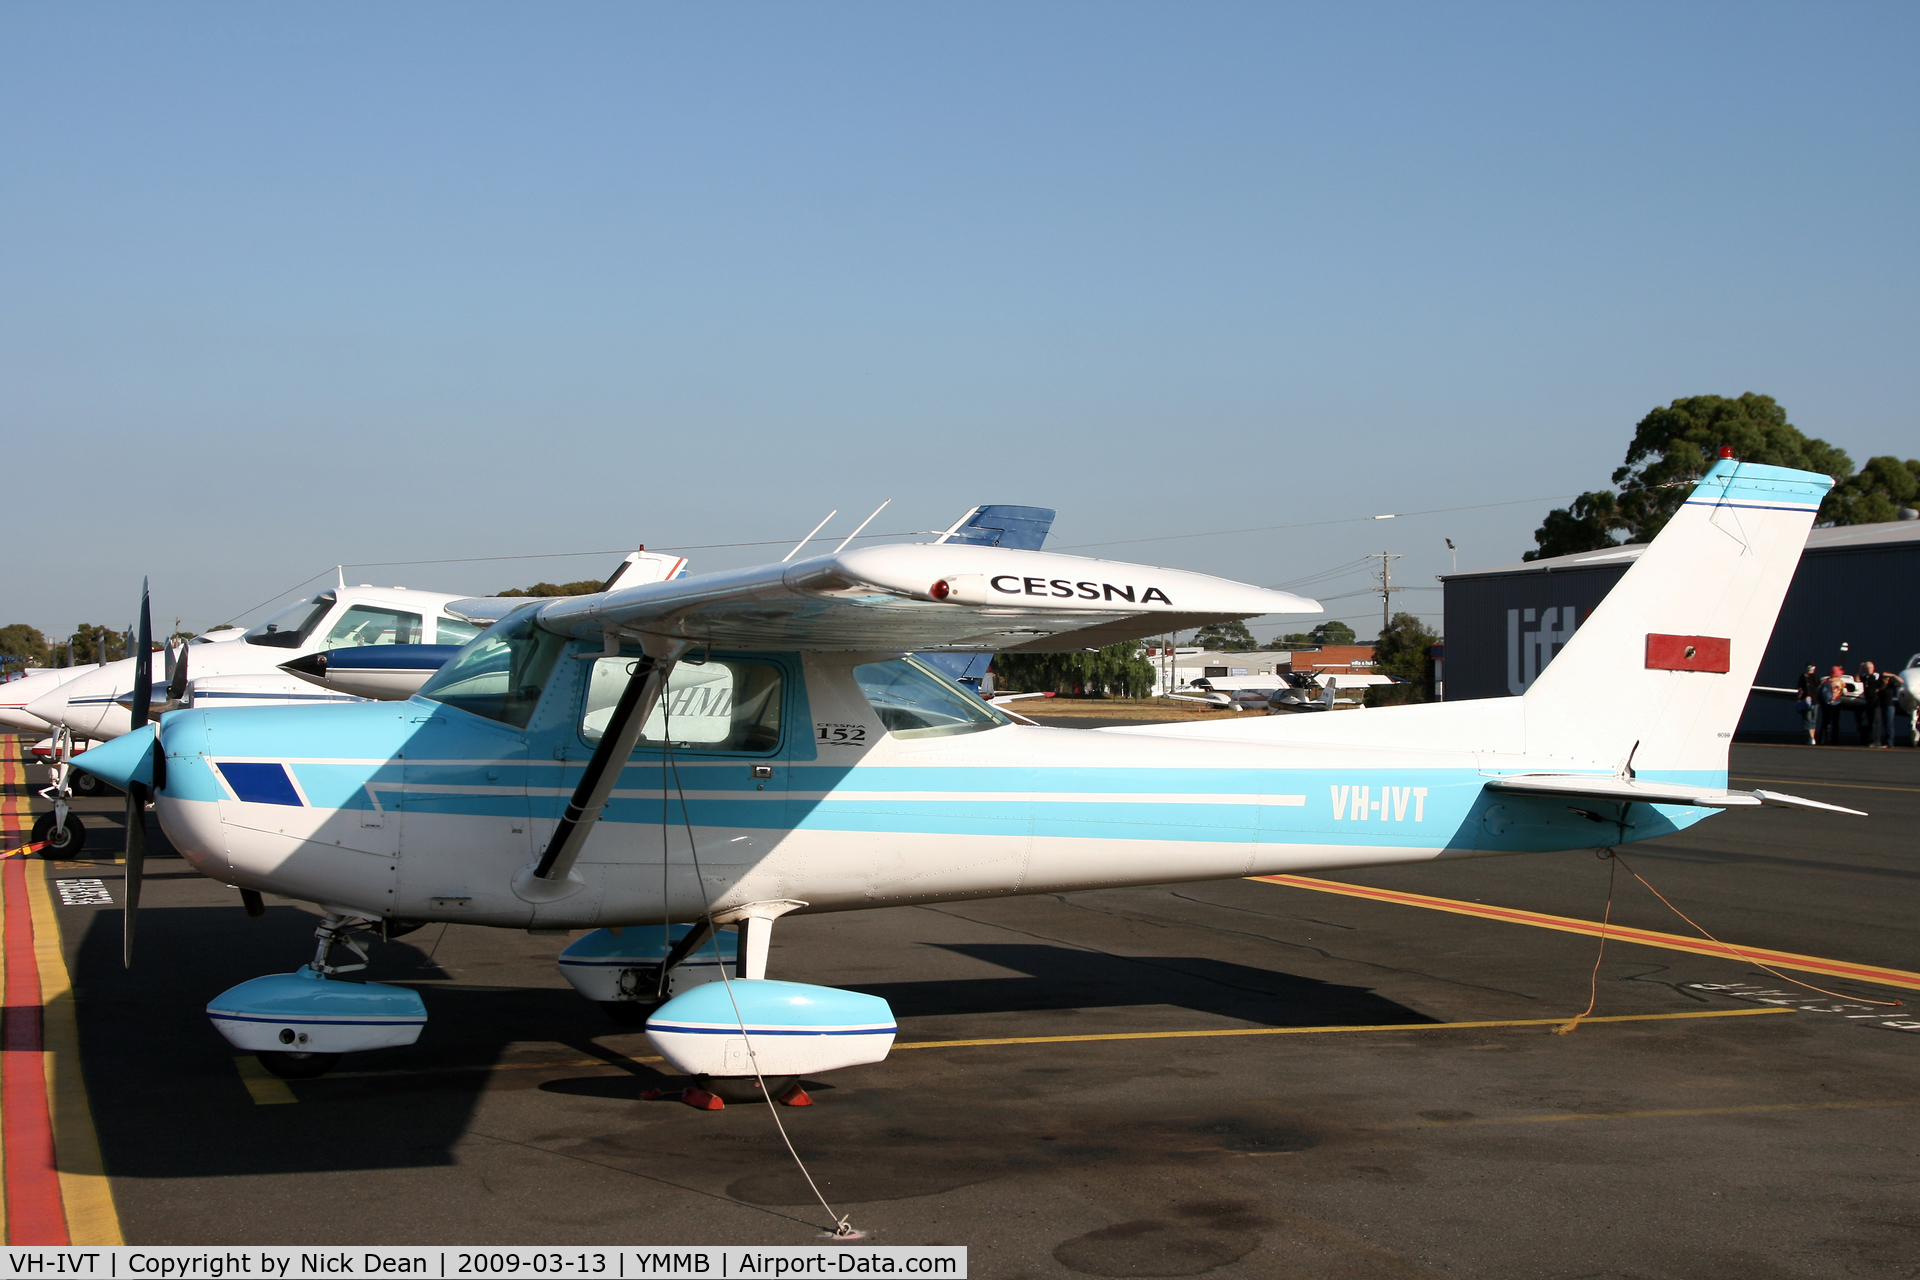 VH-IVT, 1977 Cessna 152 C/N 15280246, YMMB